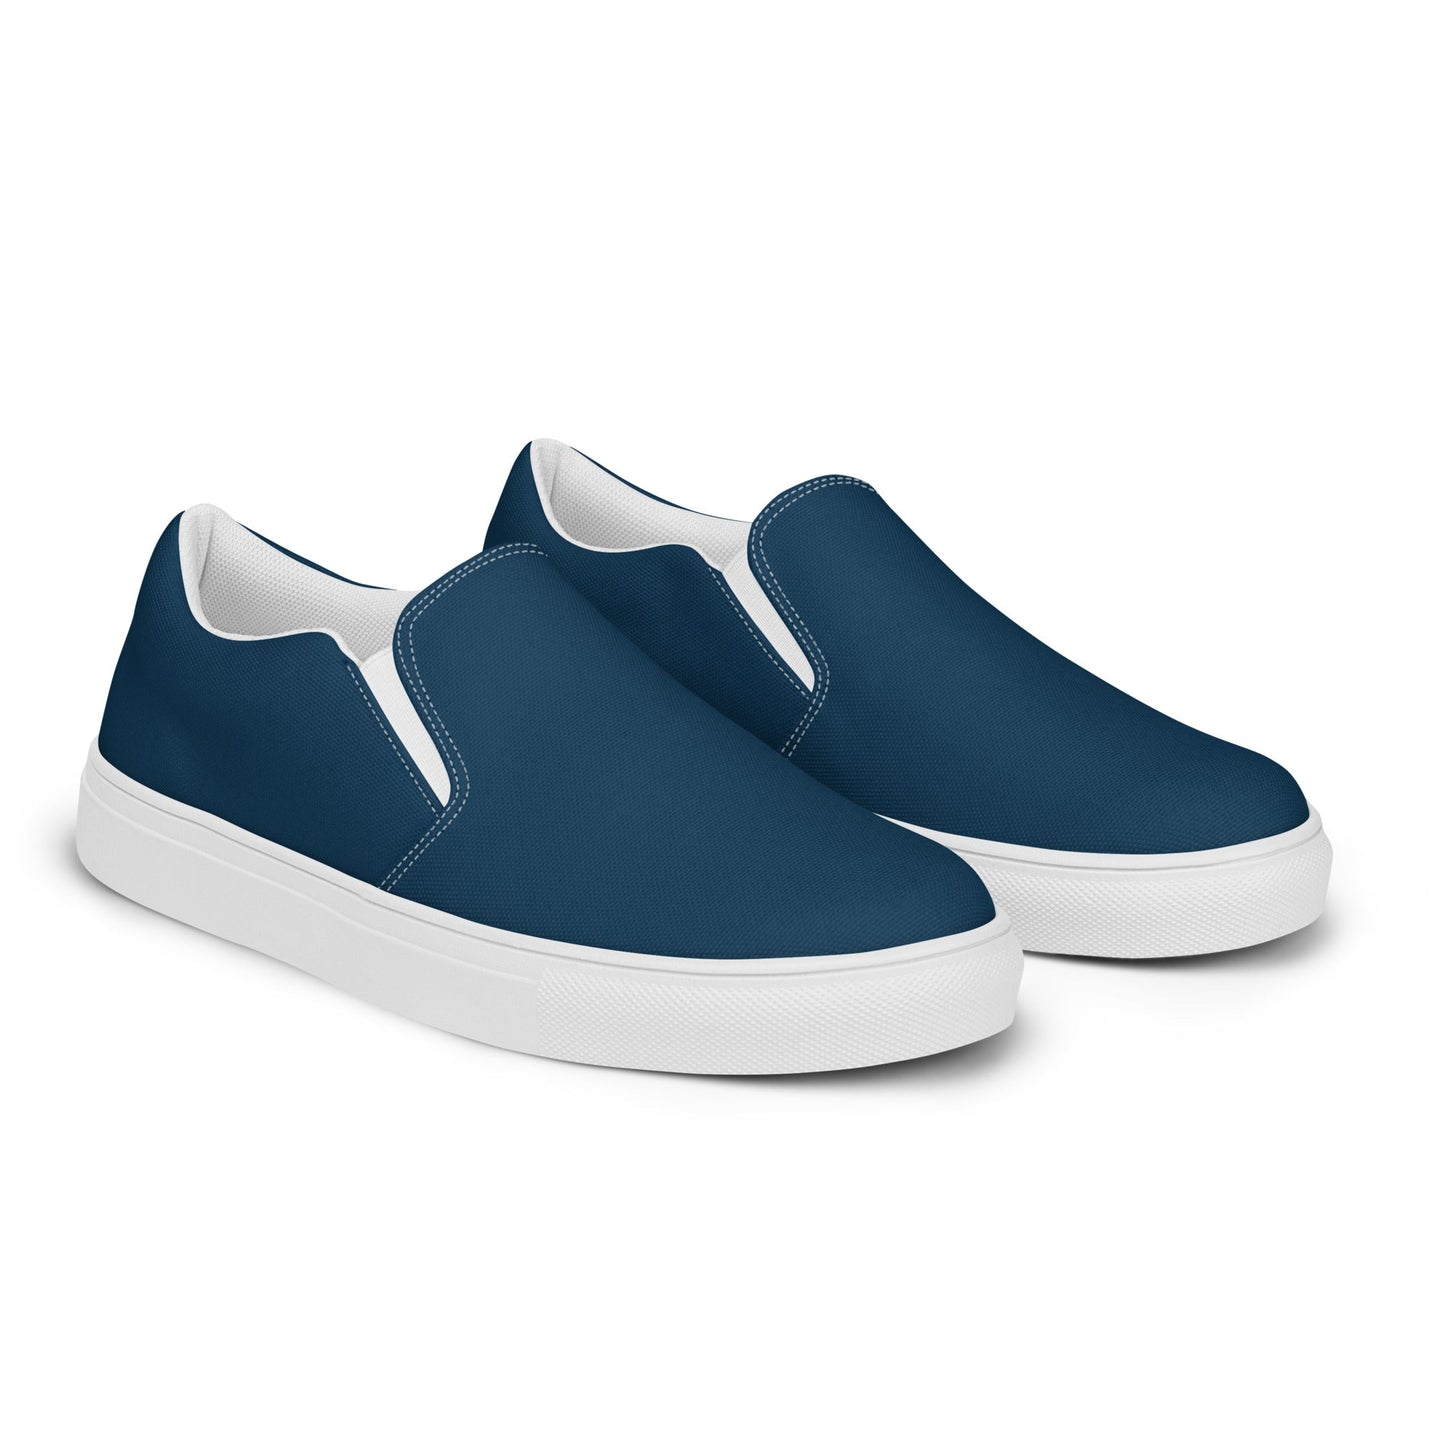 klasneakers Men’s slip-on canvas shoes - Ink Blue